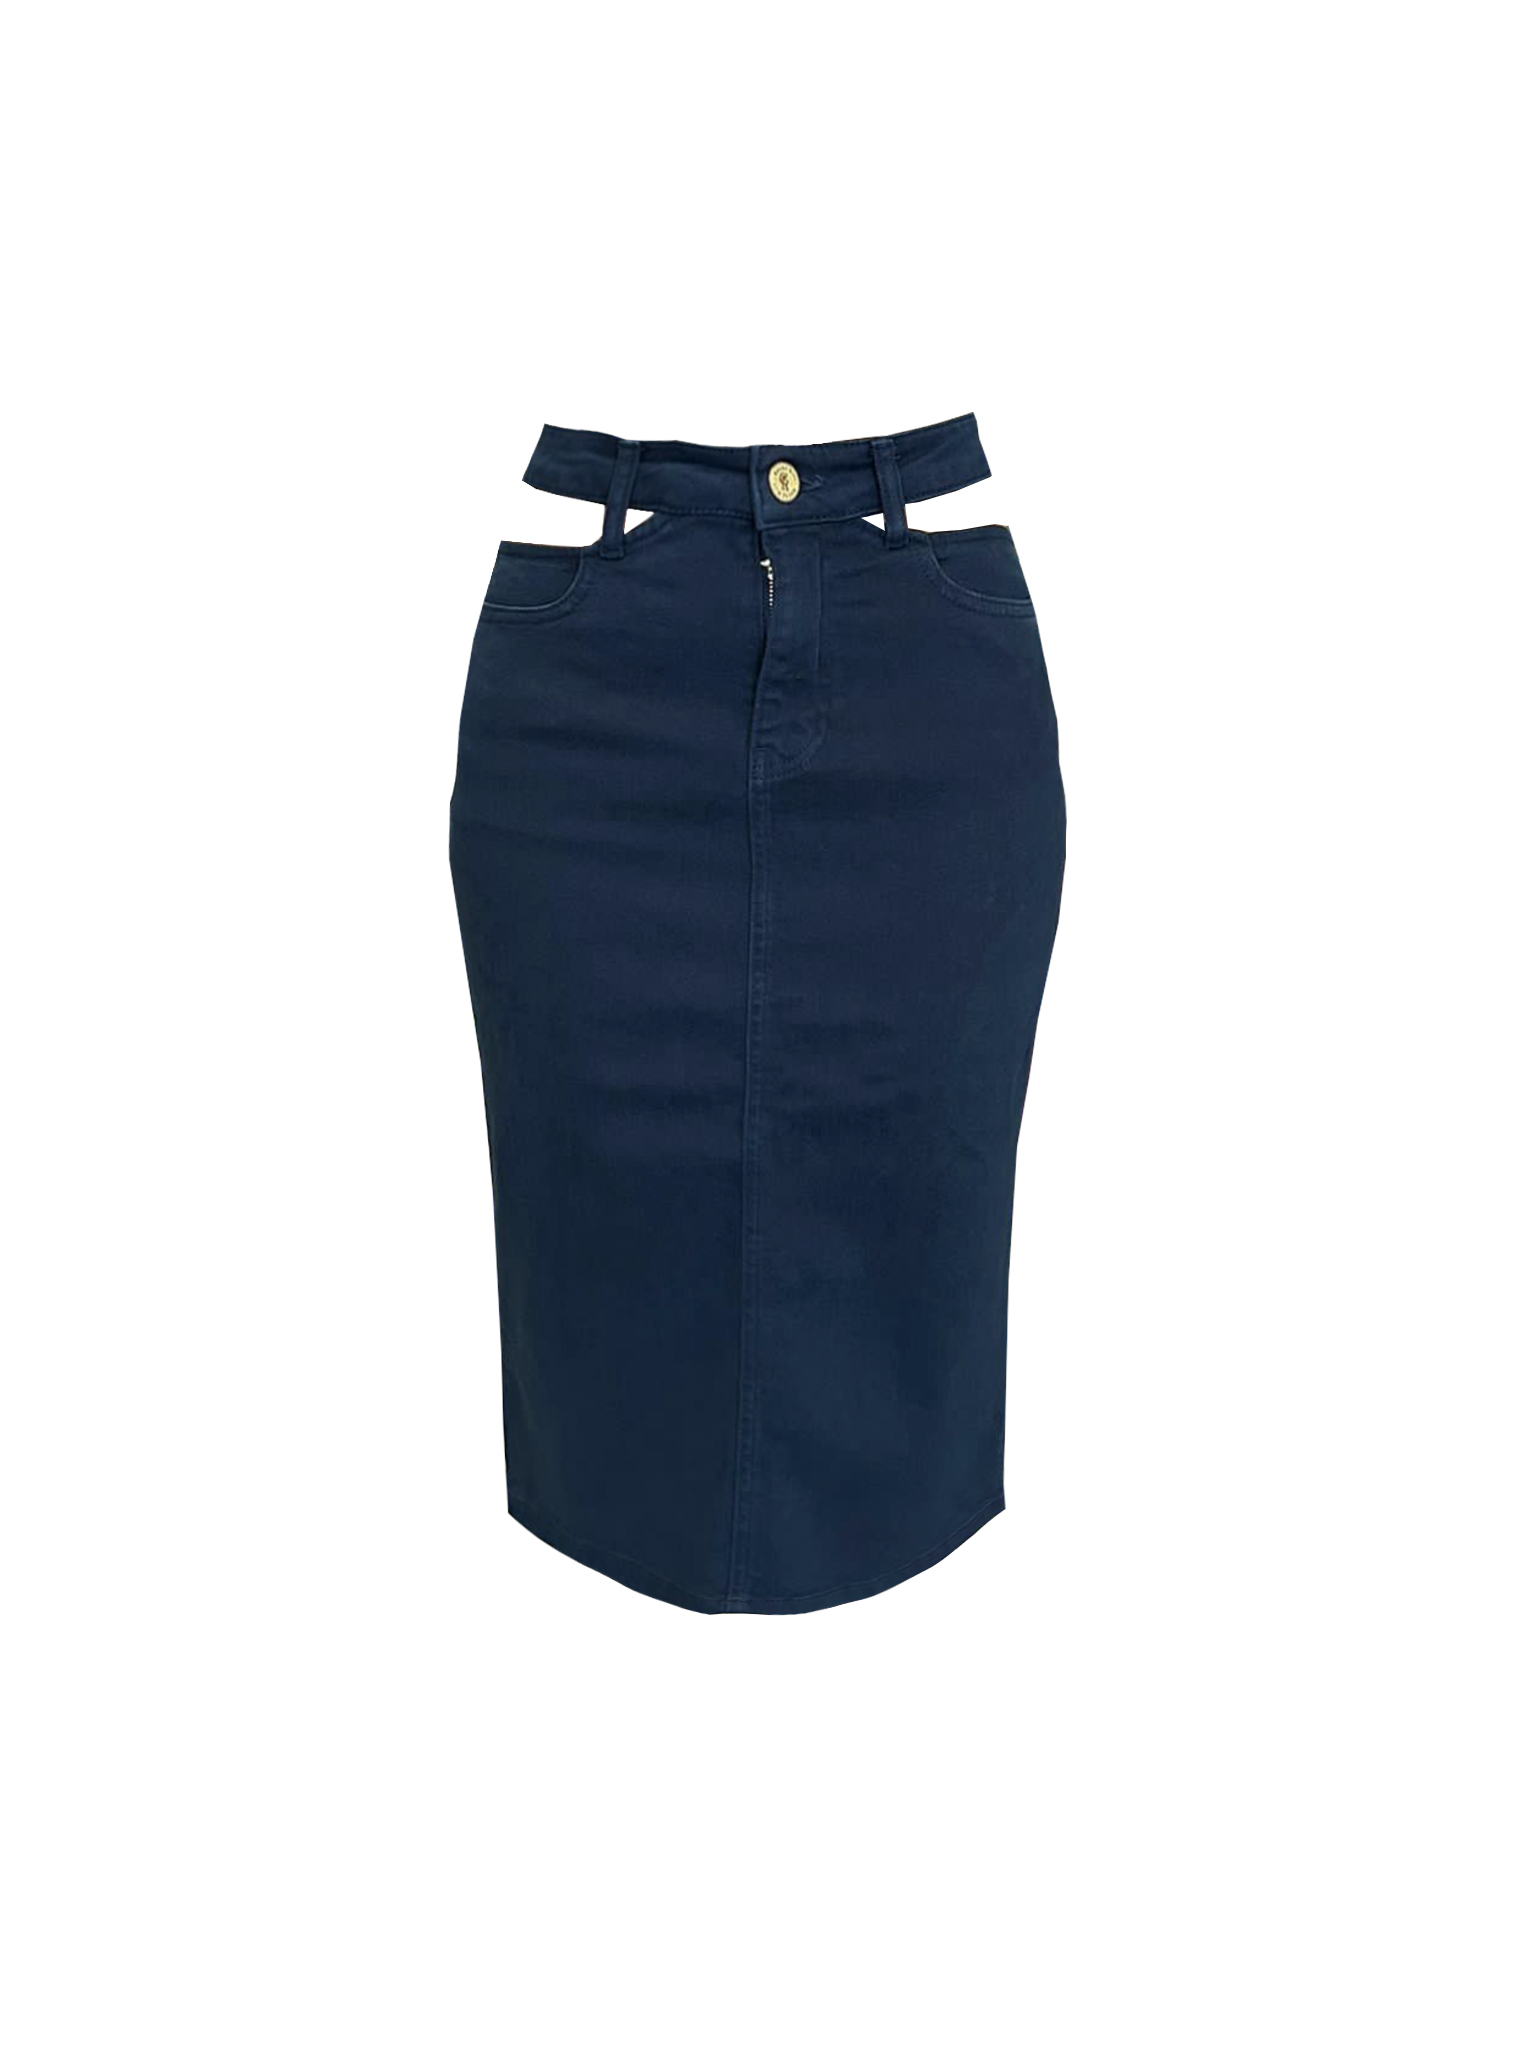 RG-405 Open belted denim pencil navy blue skirt